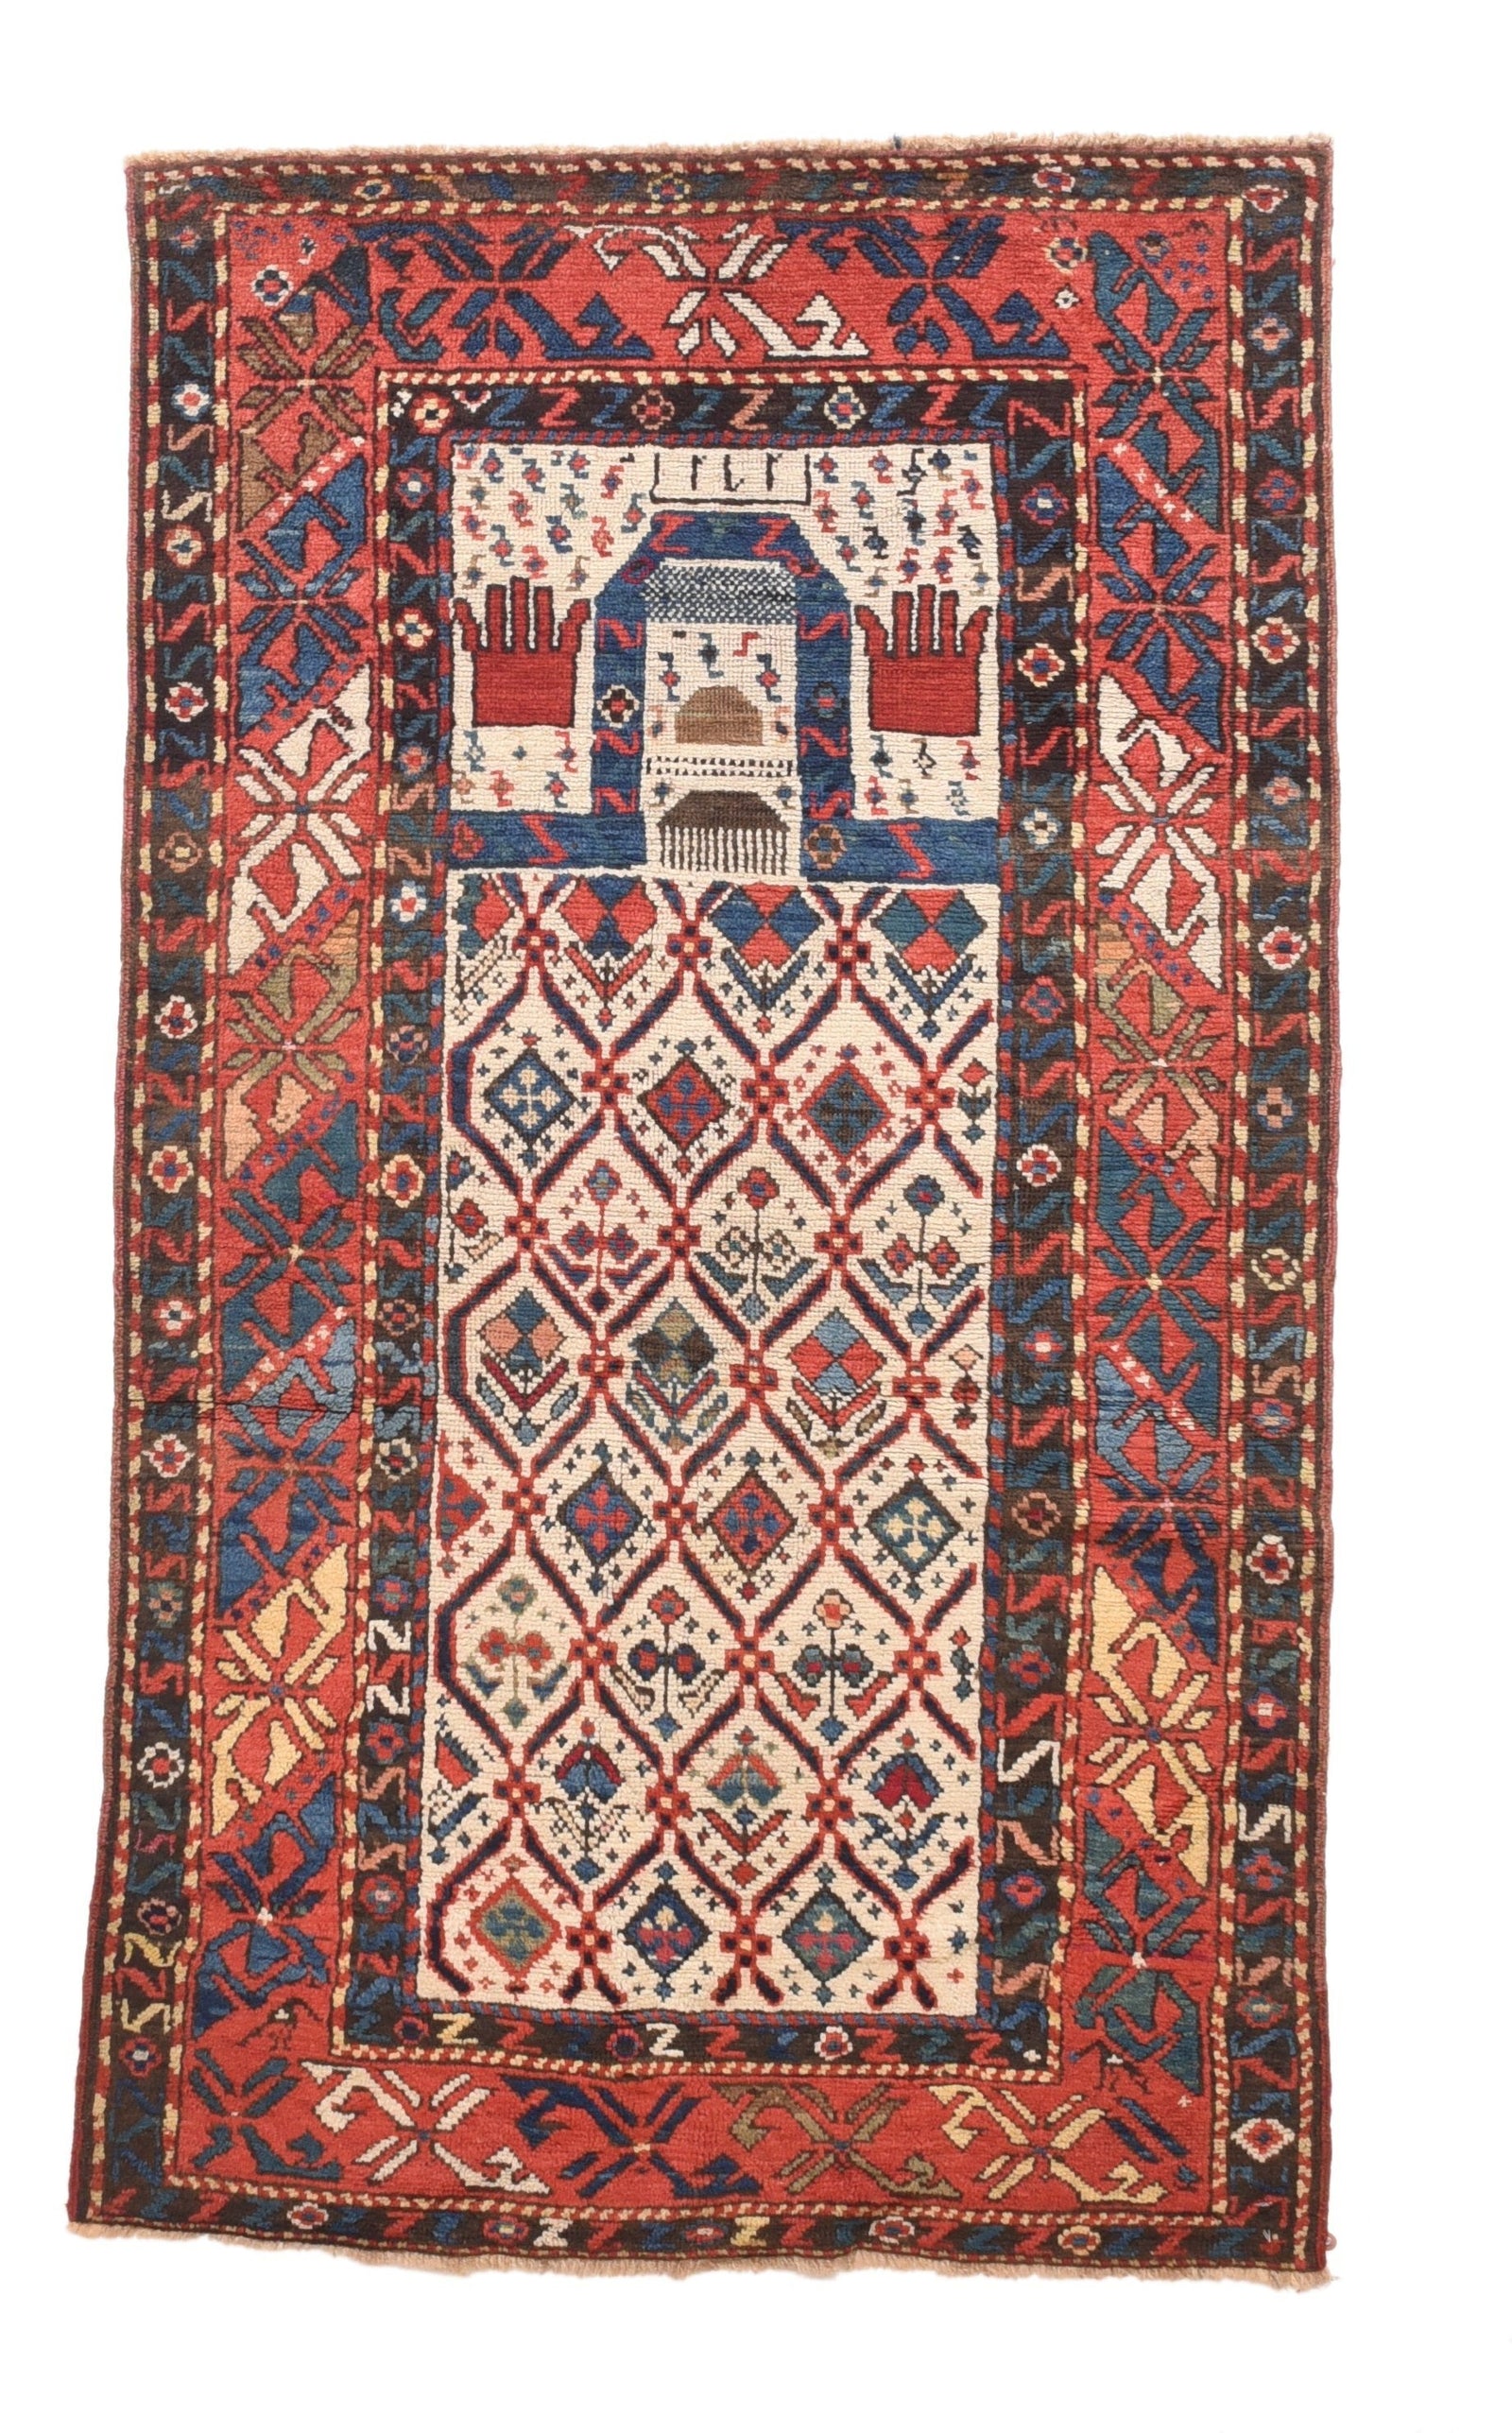 Antique Ivory Ganja - Ganje Russian Prayer Area Rug